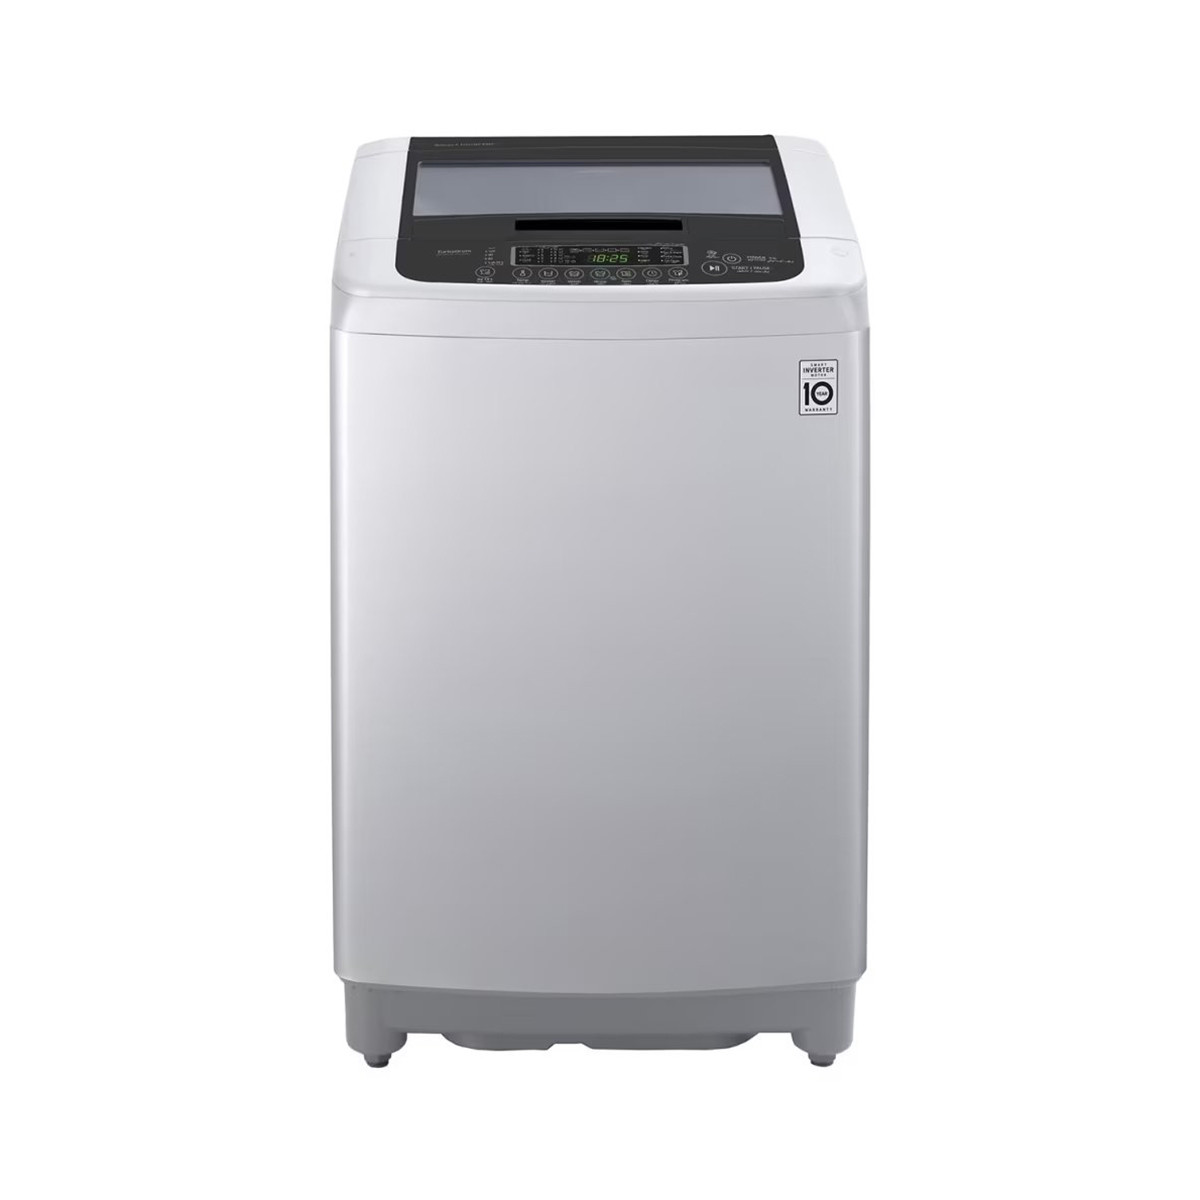 LG - Washing Machine Smart Inverter Motor, TurboDrum, Smart Diagnosis, stainless steel Tub ( Plastic